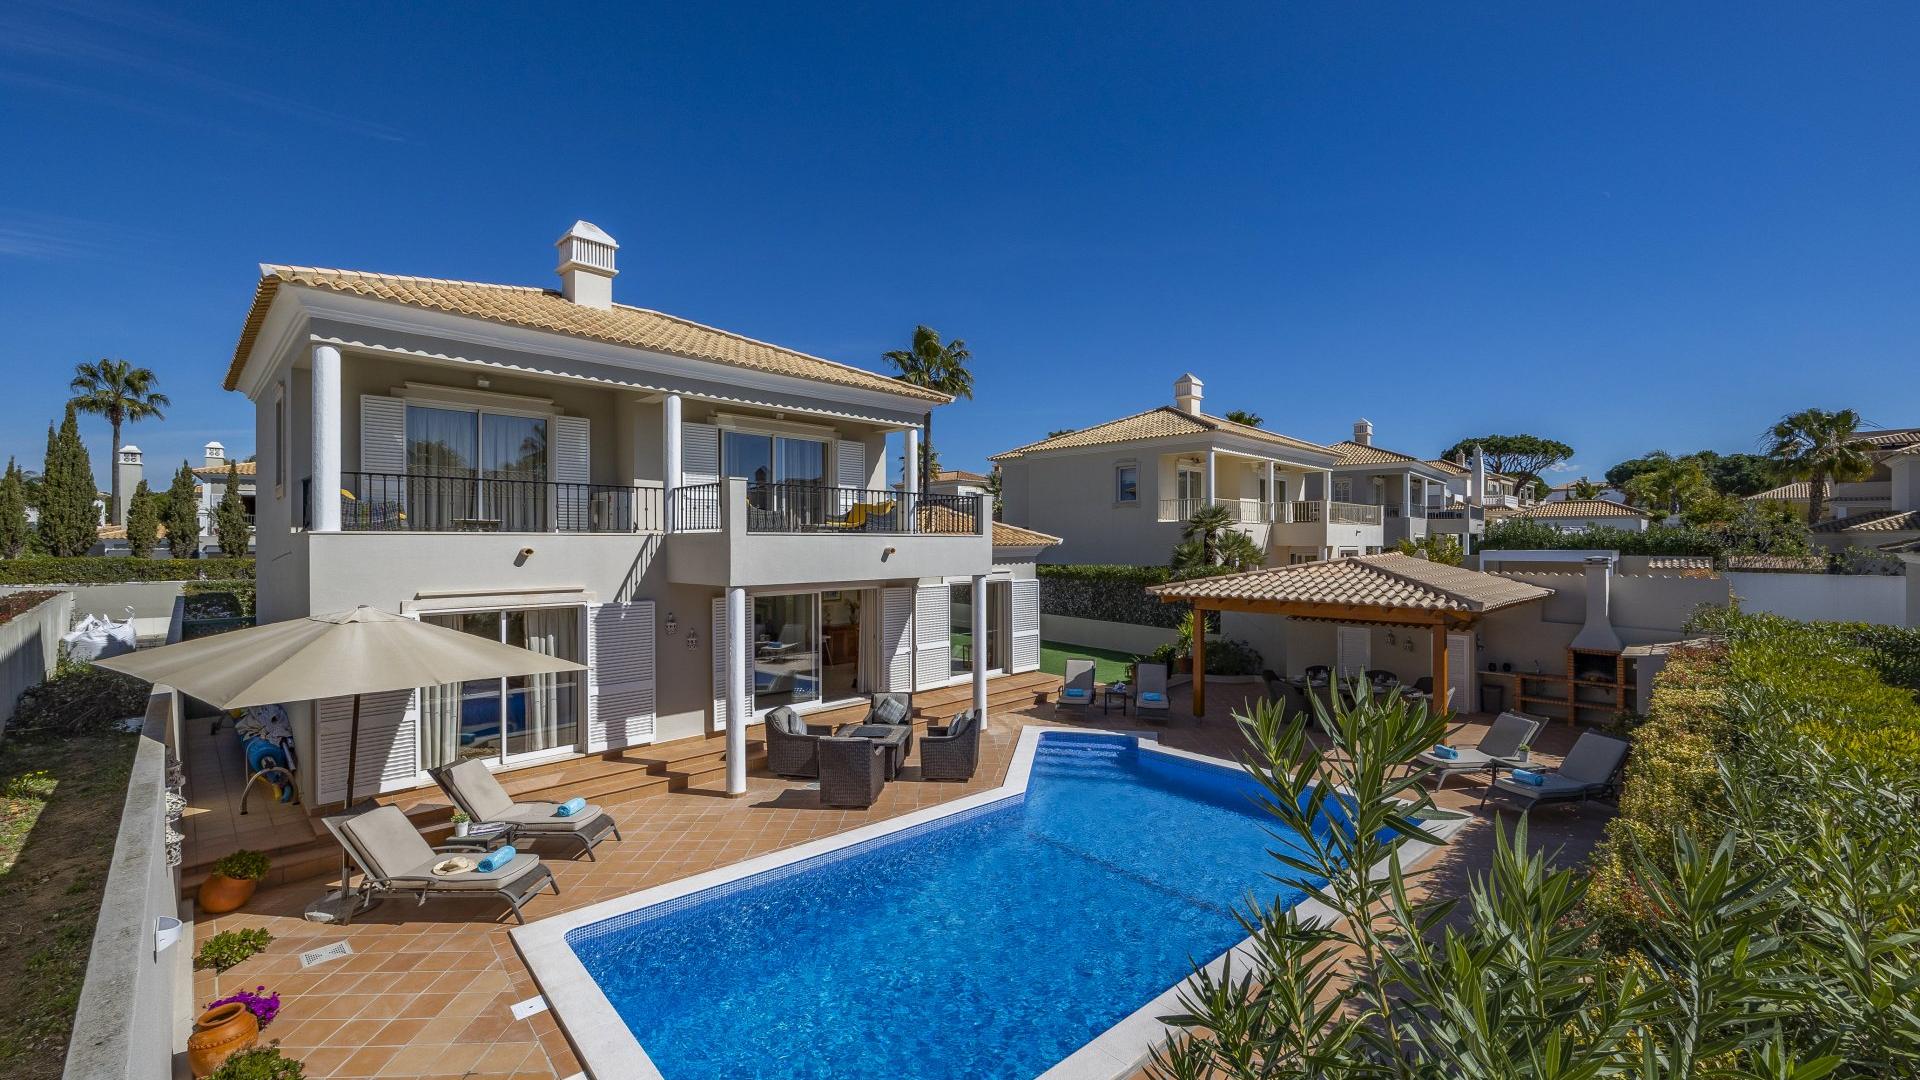 Casa Julima - Varandas do Lago, Quinta do Lago, Algarve - Casa_Julima_Exterior_1.jpg